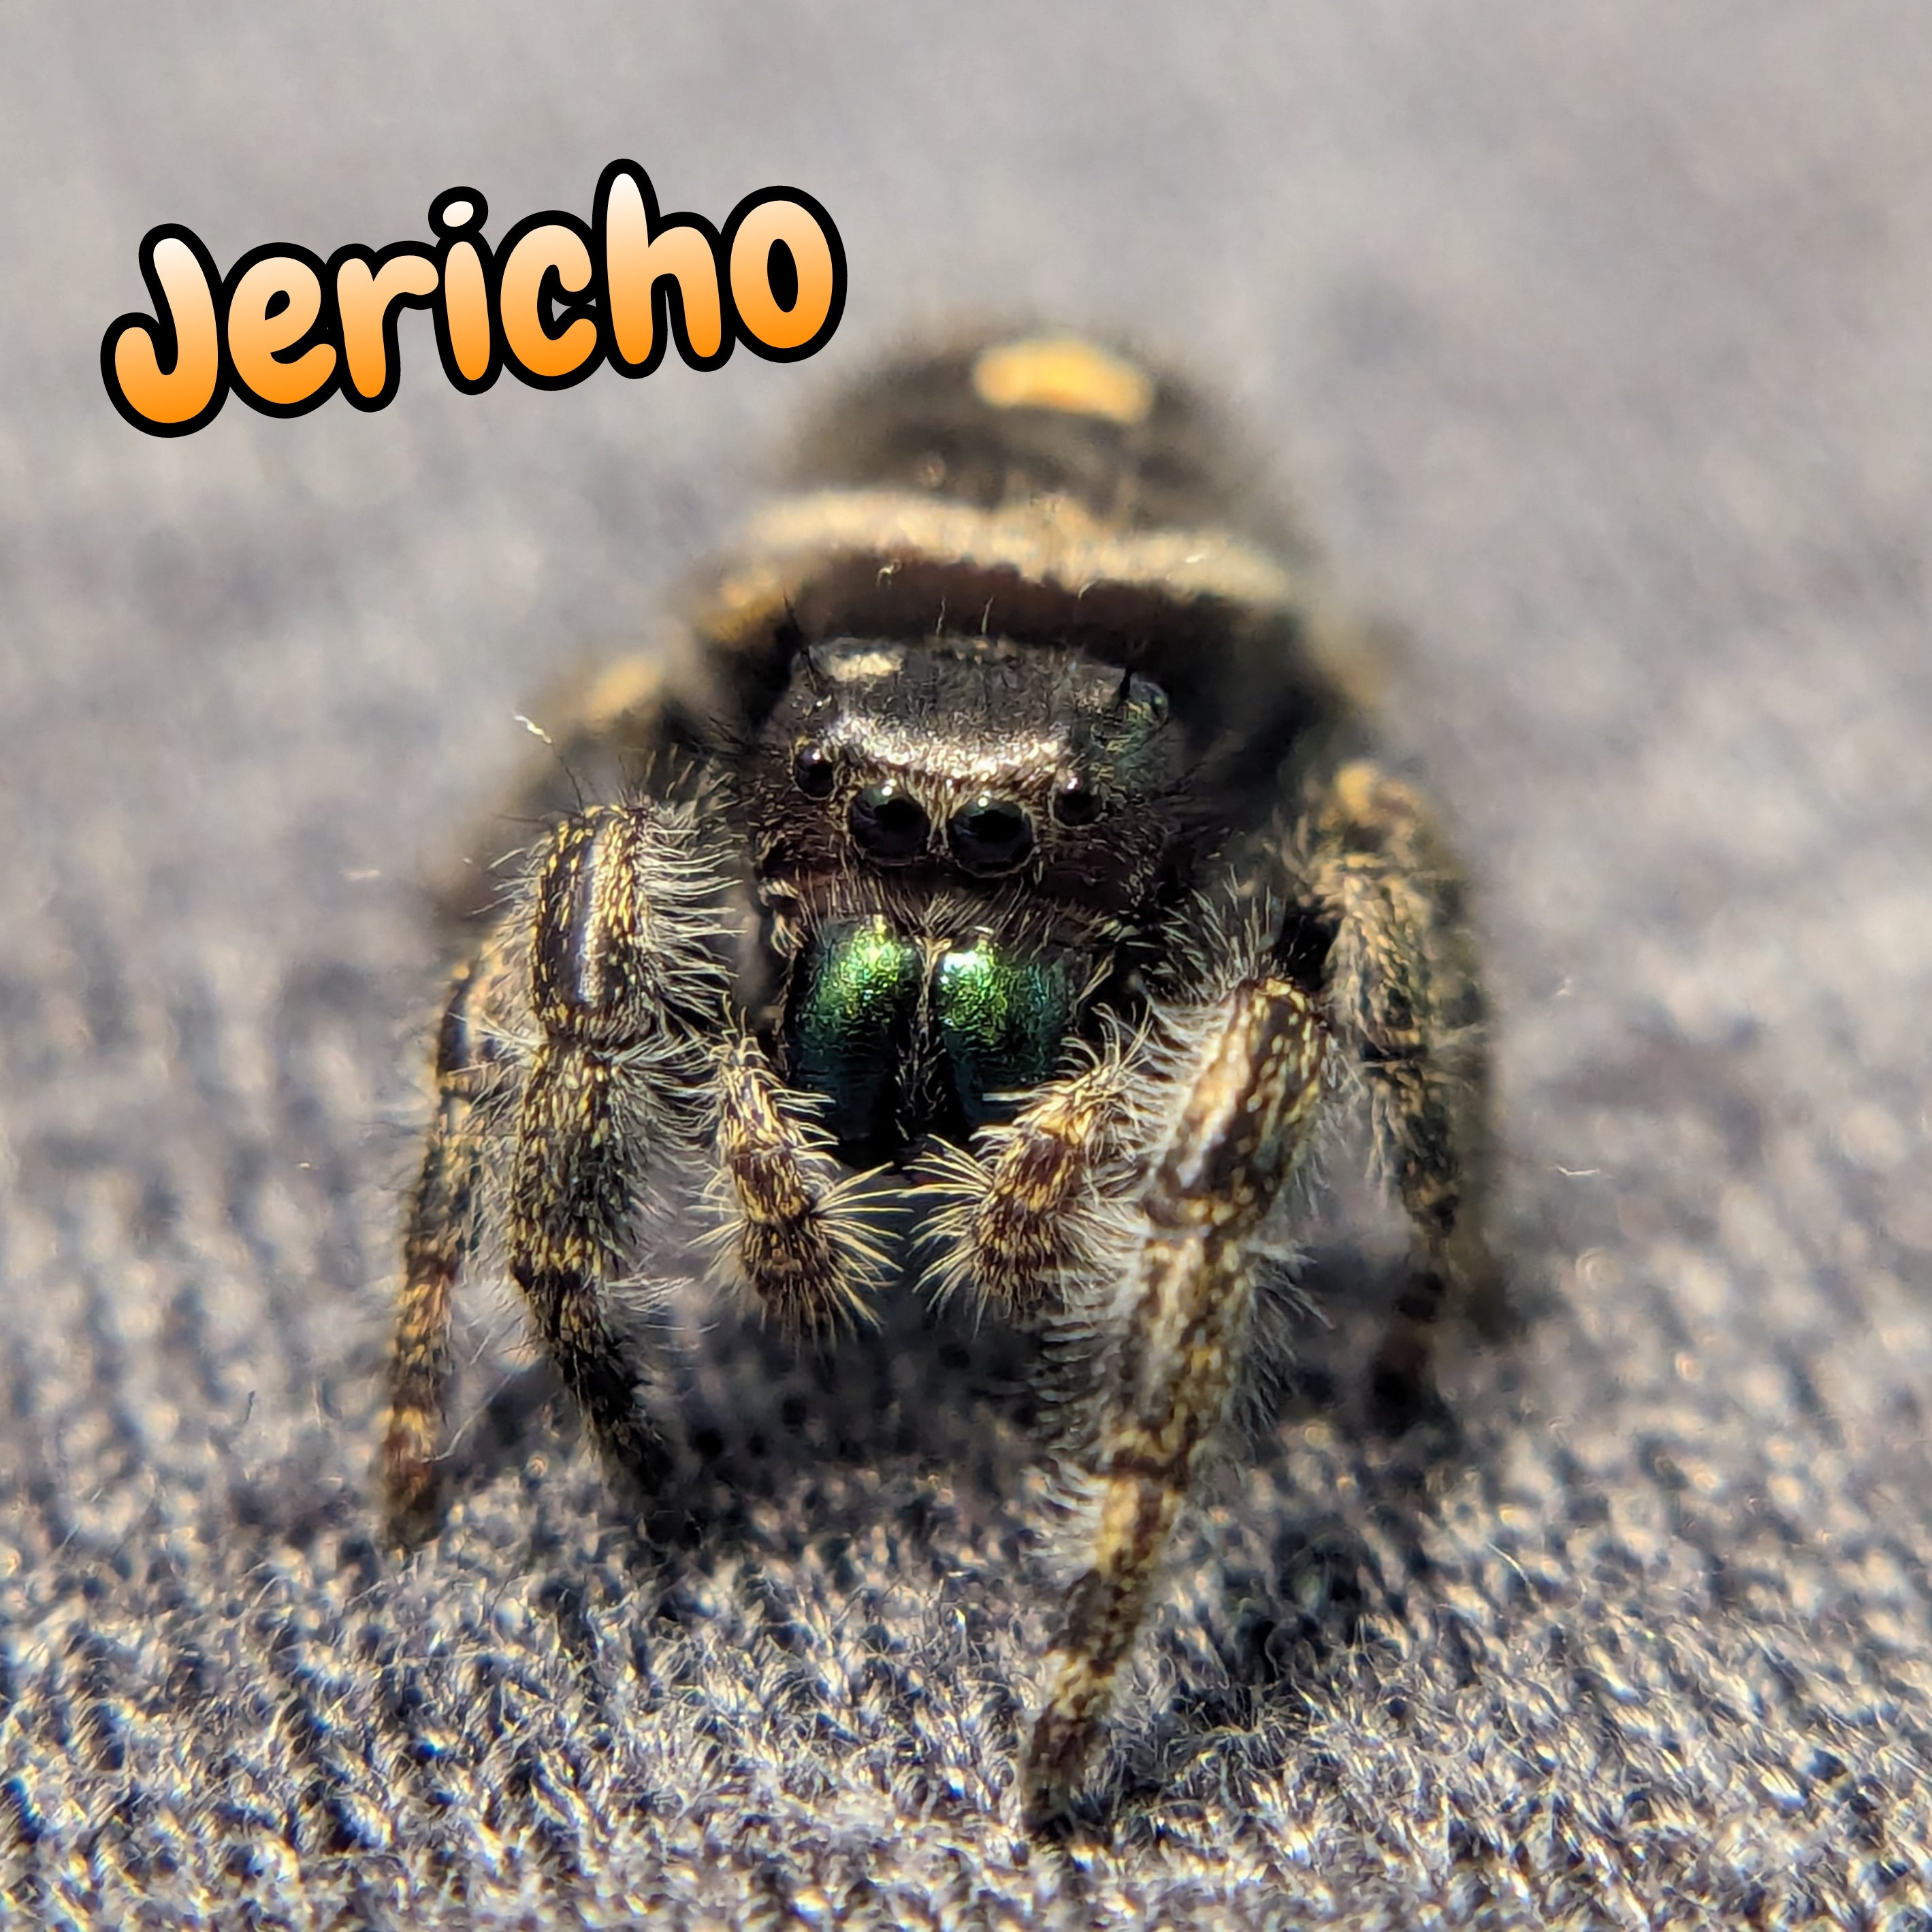 Audax Jumping Spider "Jericho"